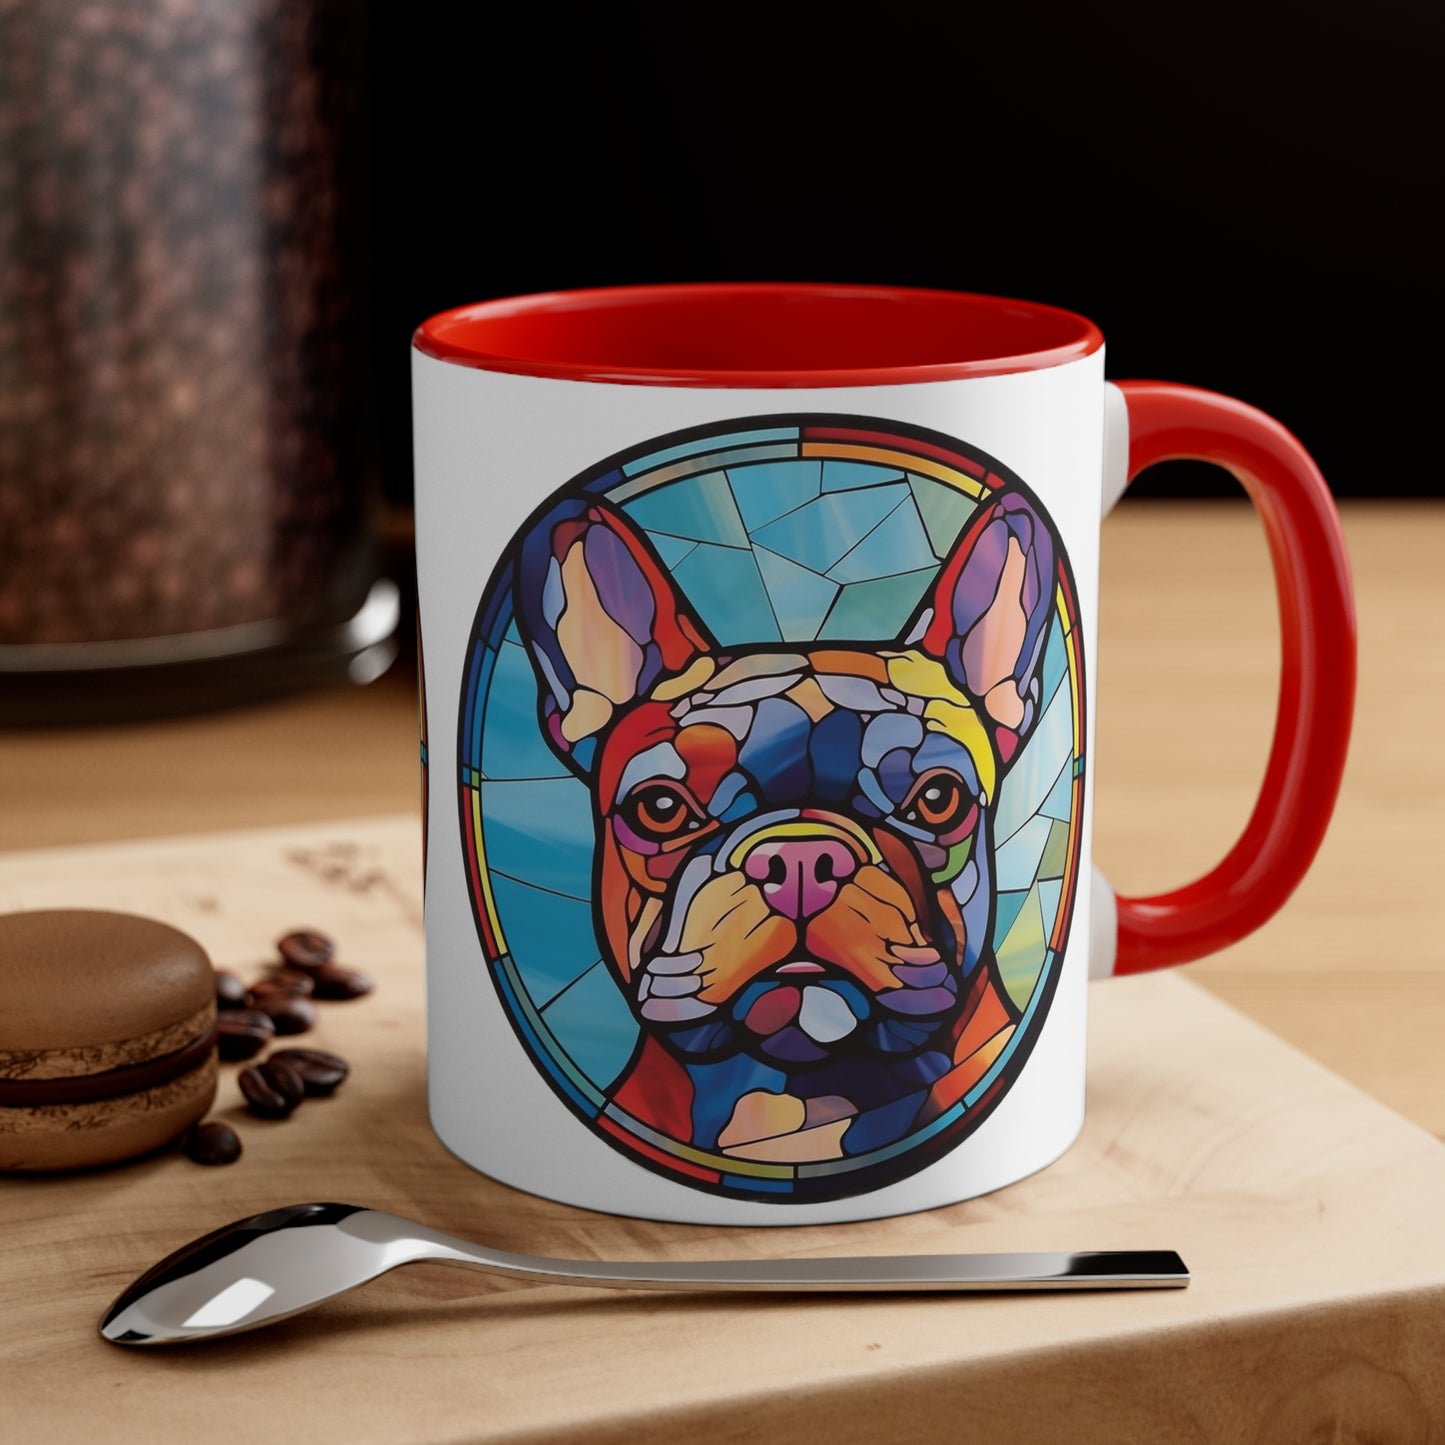 FRENCH BULLDOG MUG - Dog Breeds Mugs - Red, Pink, Blue, Navy and Black Accents - MUGSCITY - Free Shipping